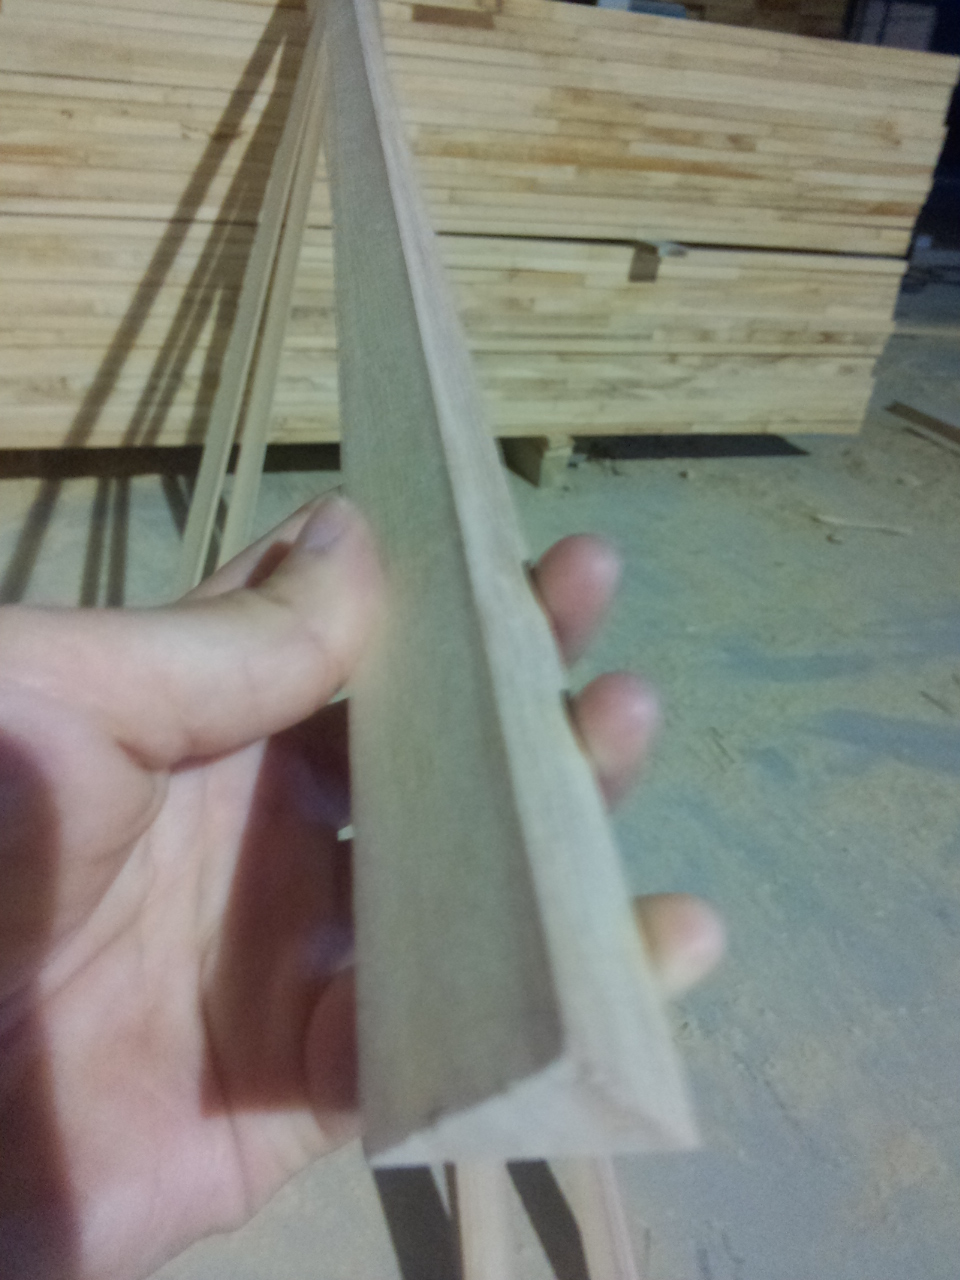 Paulownia triangular strips for decorative wood